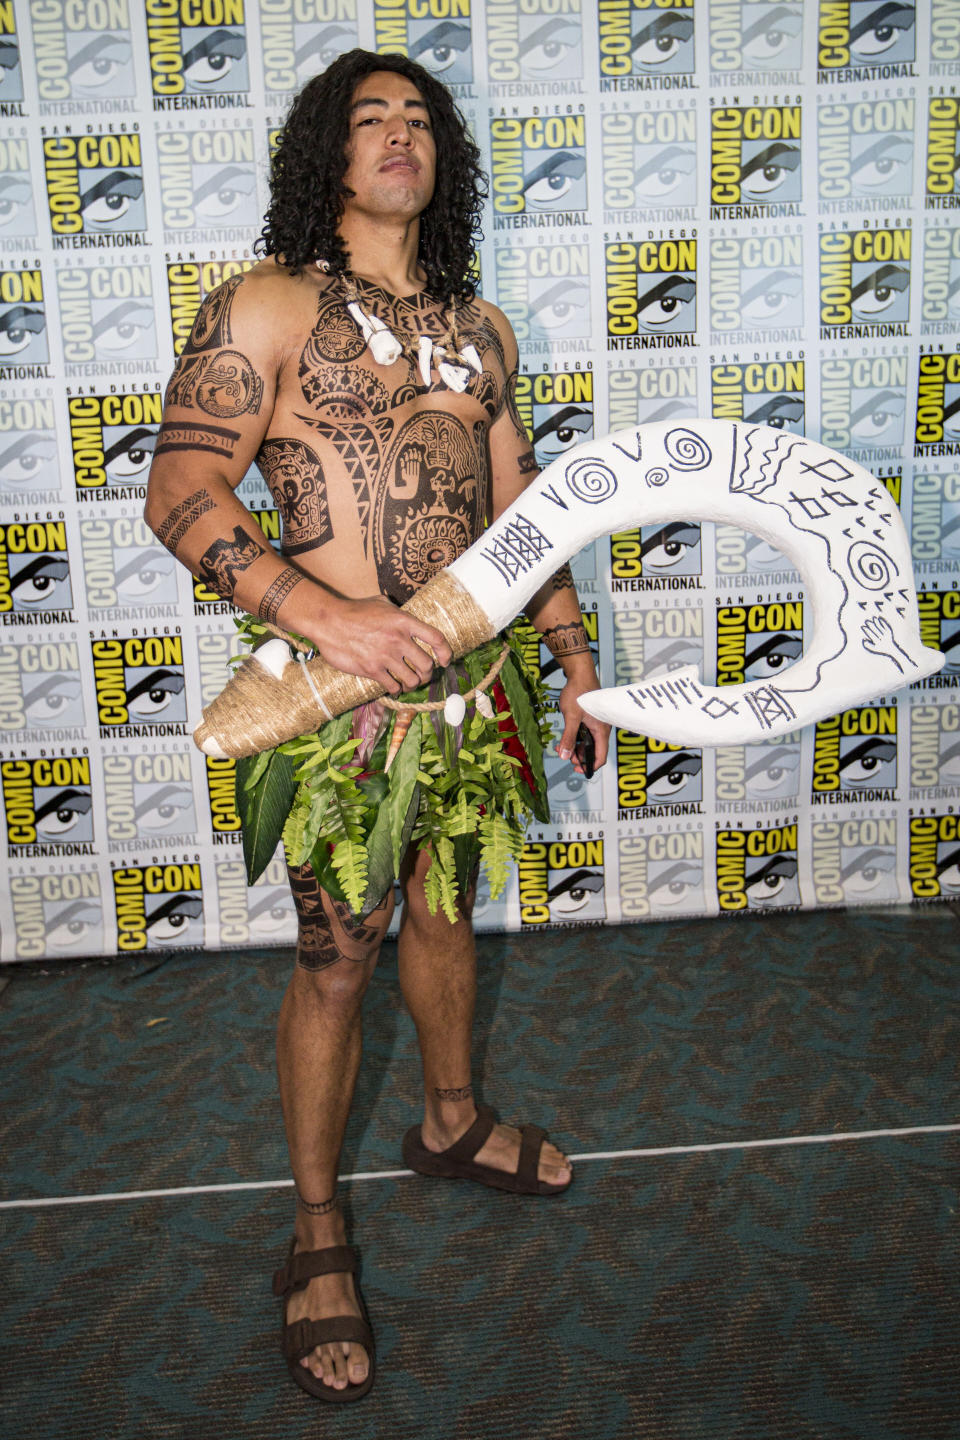 Cosplayer Wester Demandante as Maui from "Moana."&nbsp;